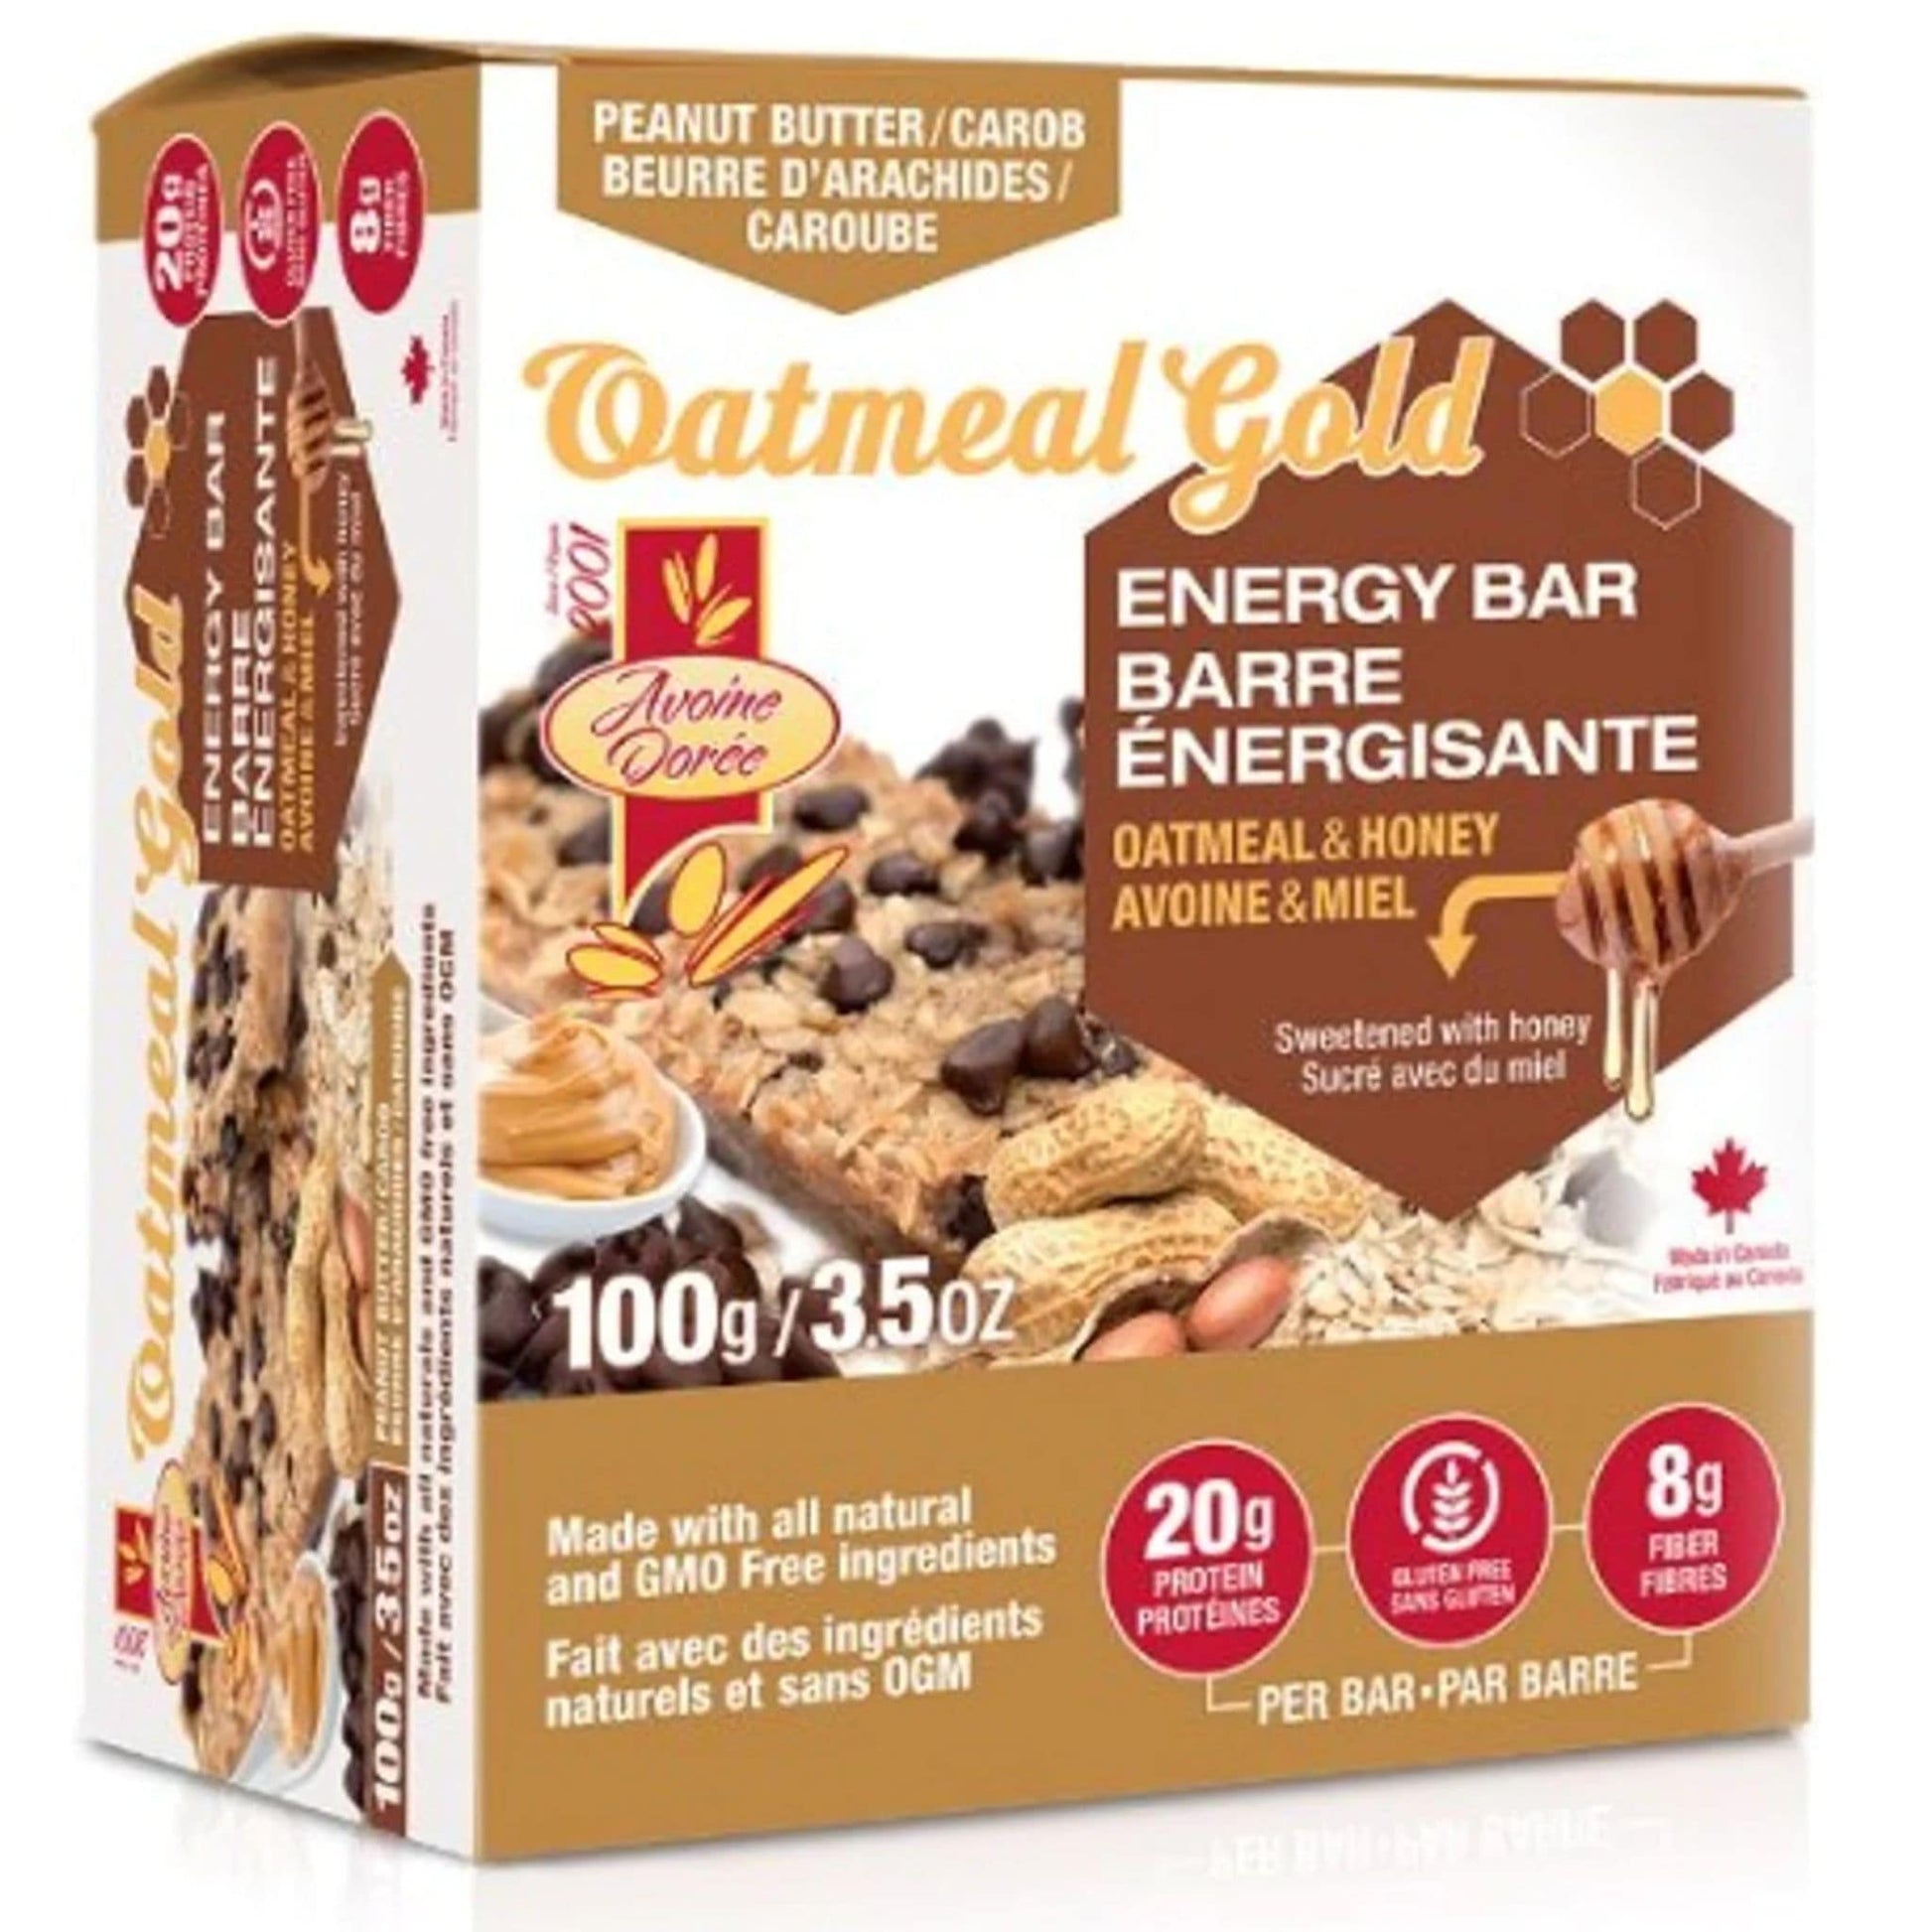 12 x 100g Peanut Butter Carob | Oatmeal Gold All Natural Energy Bar